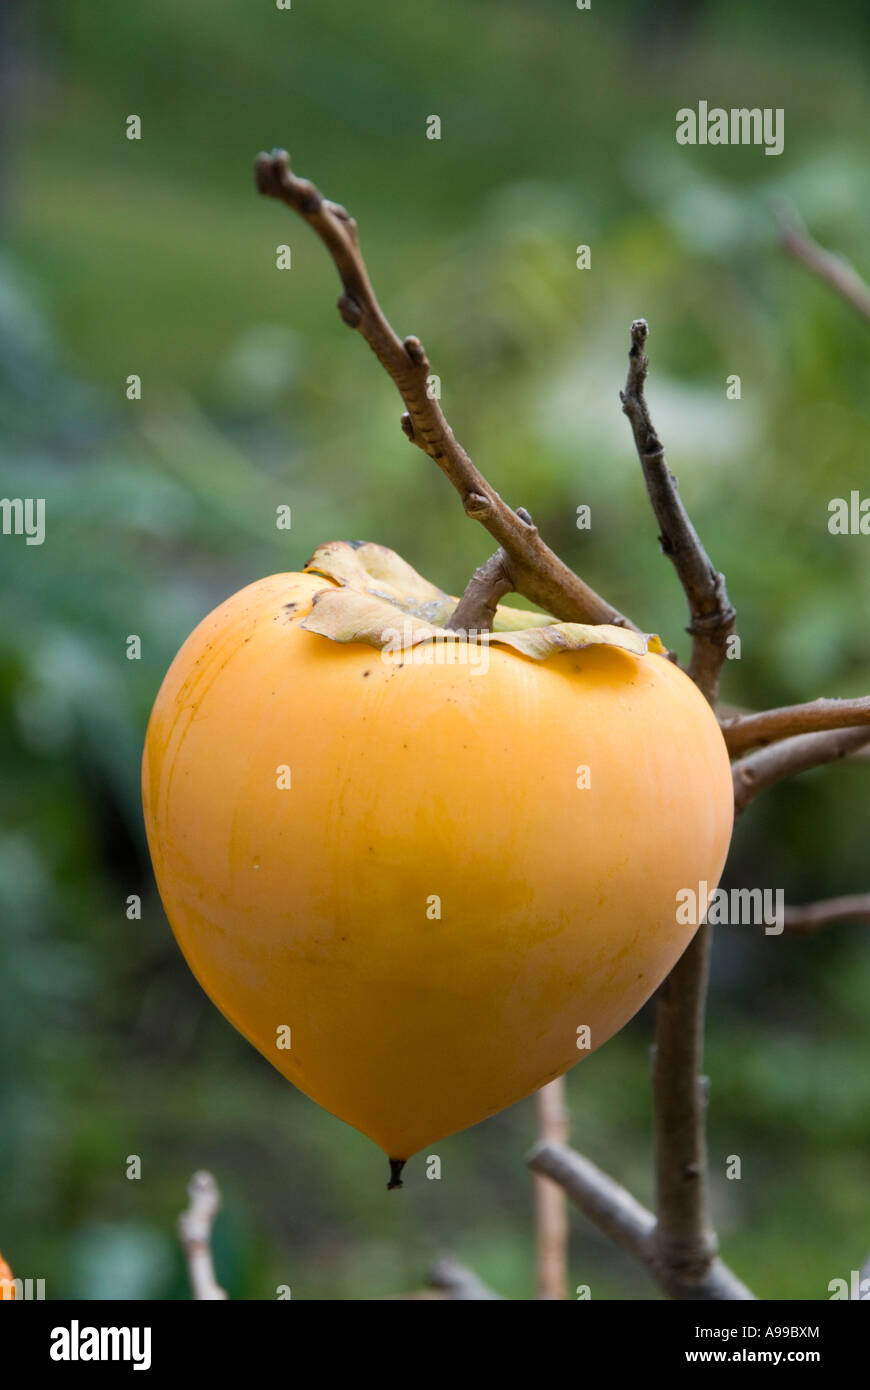 Ripe persimmon on tree Stock Photo